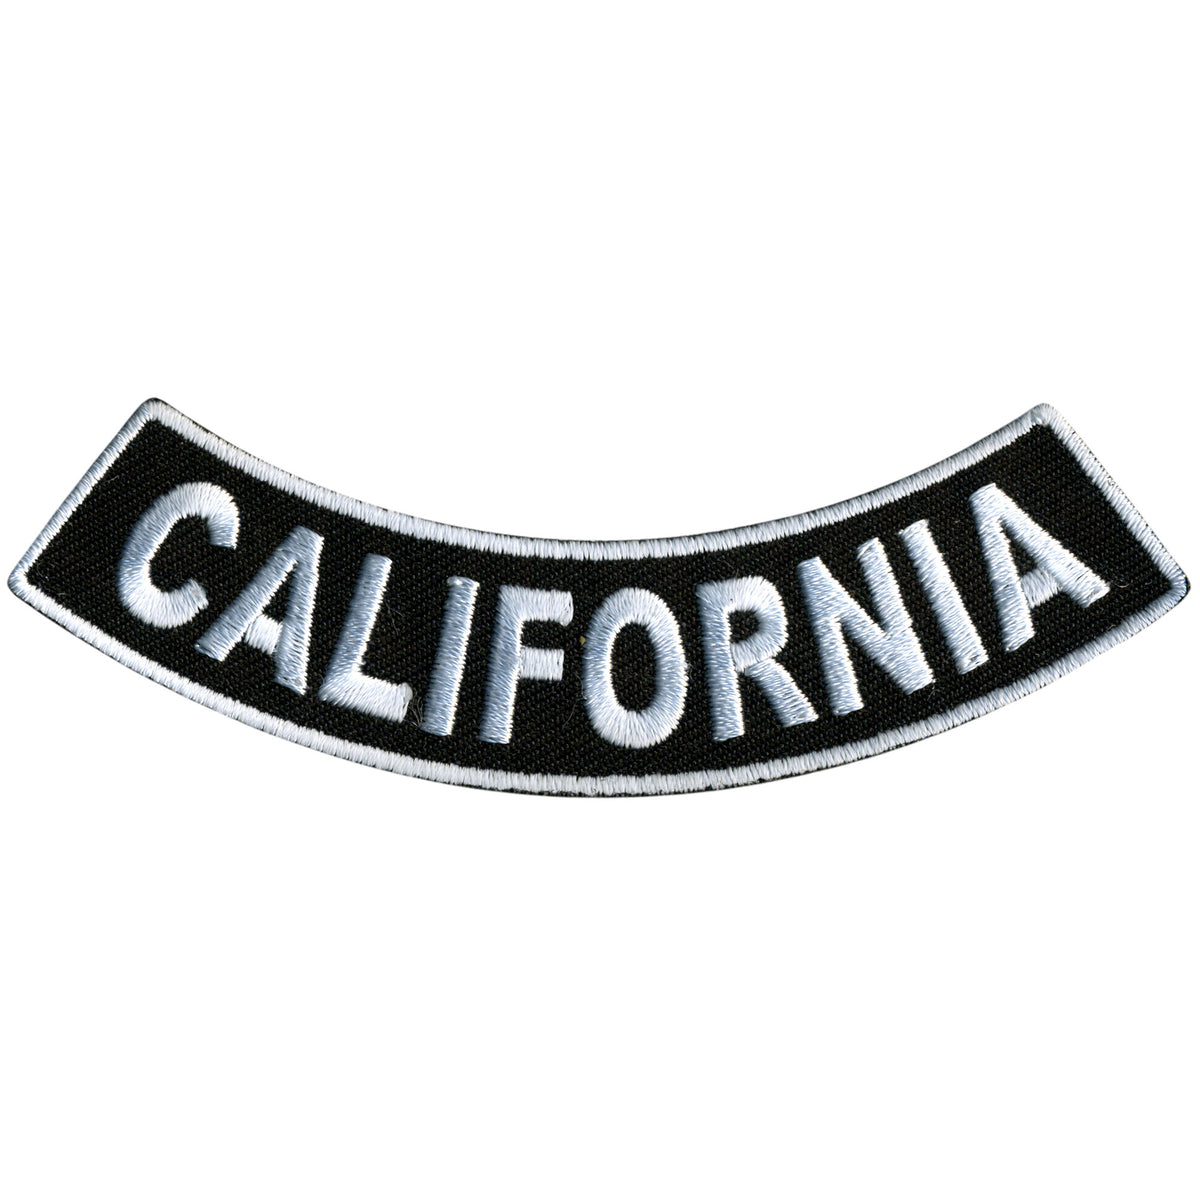 Hot Leathers California 4” X 1” Bottom Rocker Patch